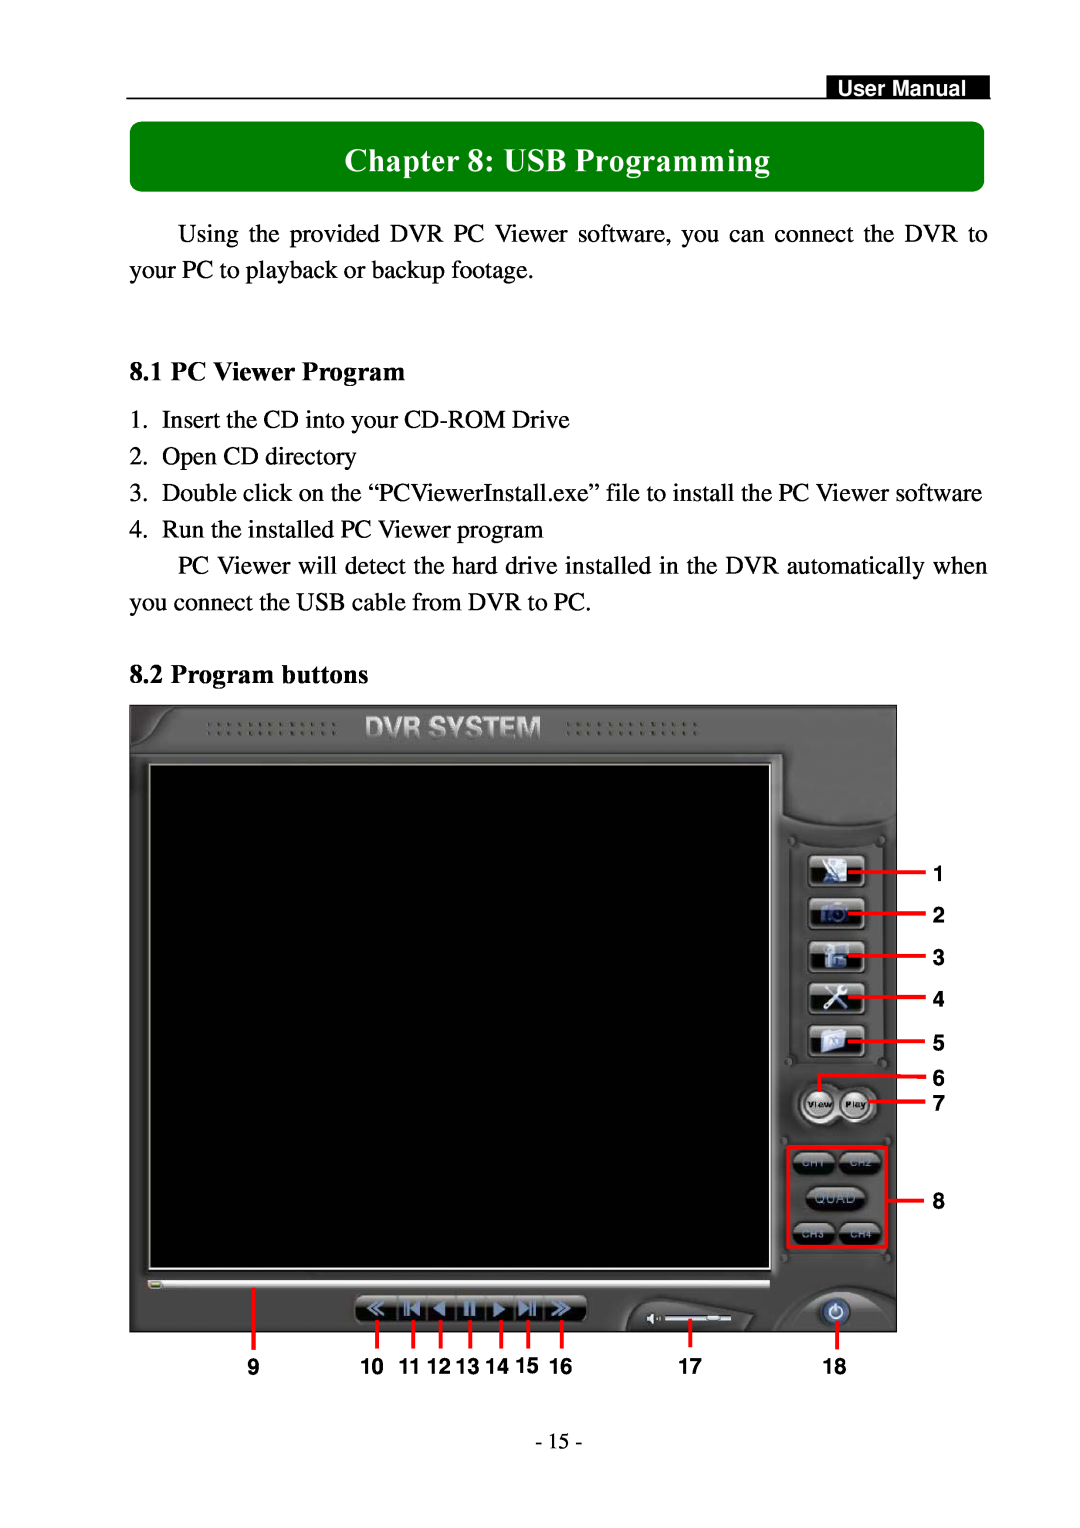 Swann SW242-2LP user manual USB Programming, PC Viewer Program, Program buttons 